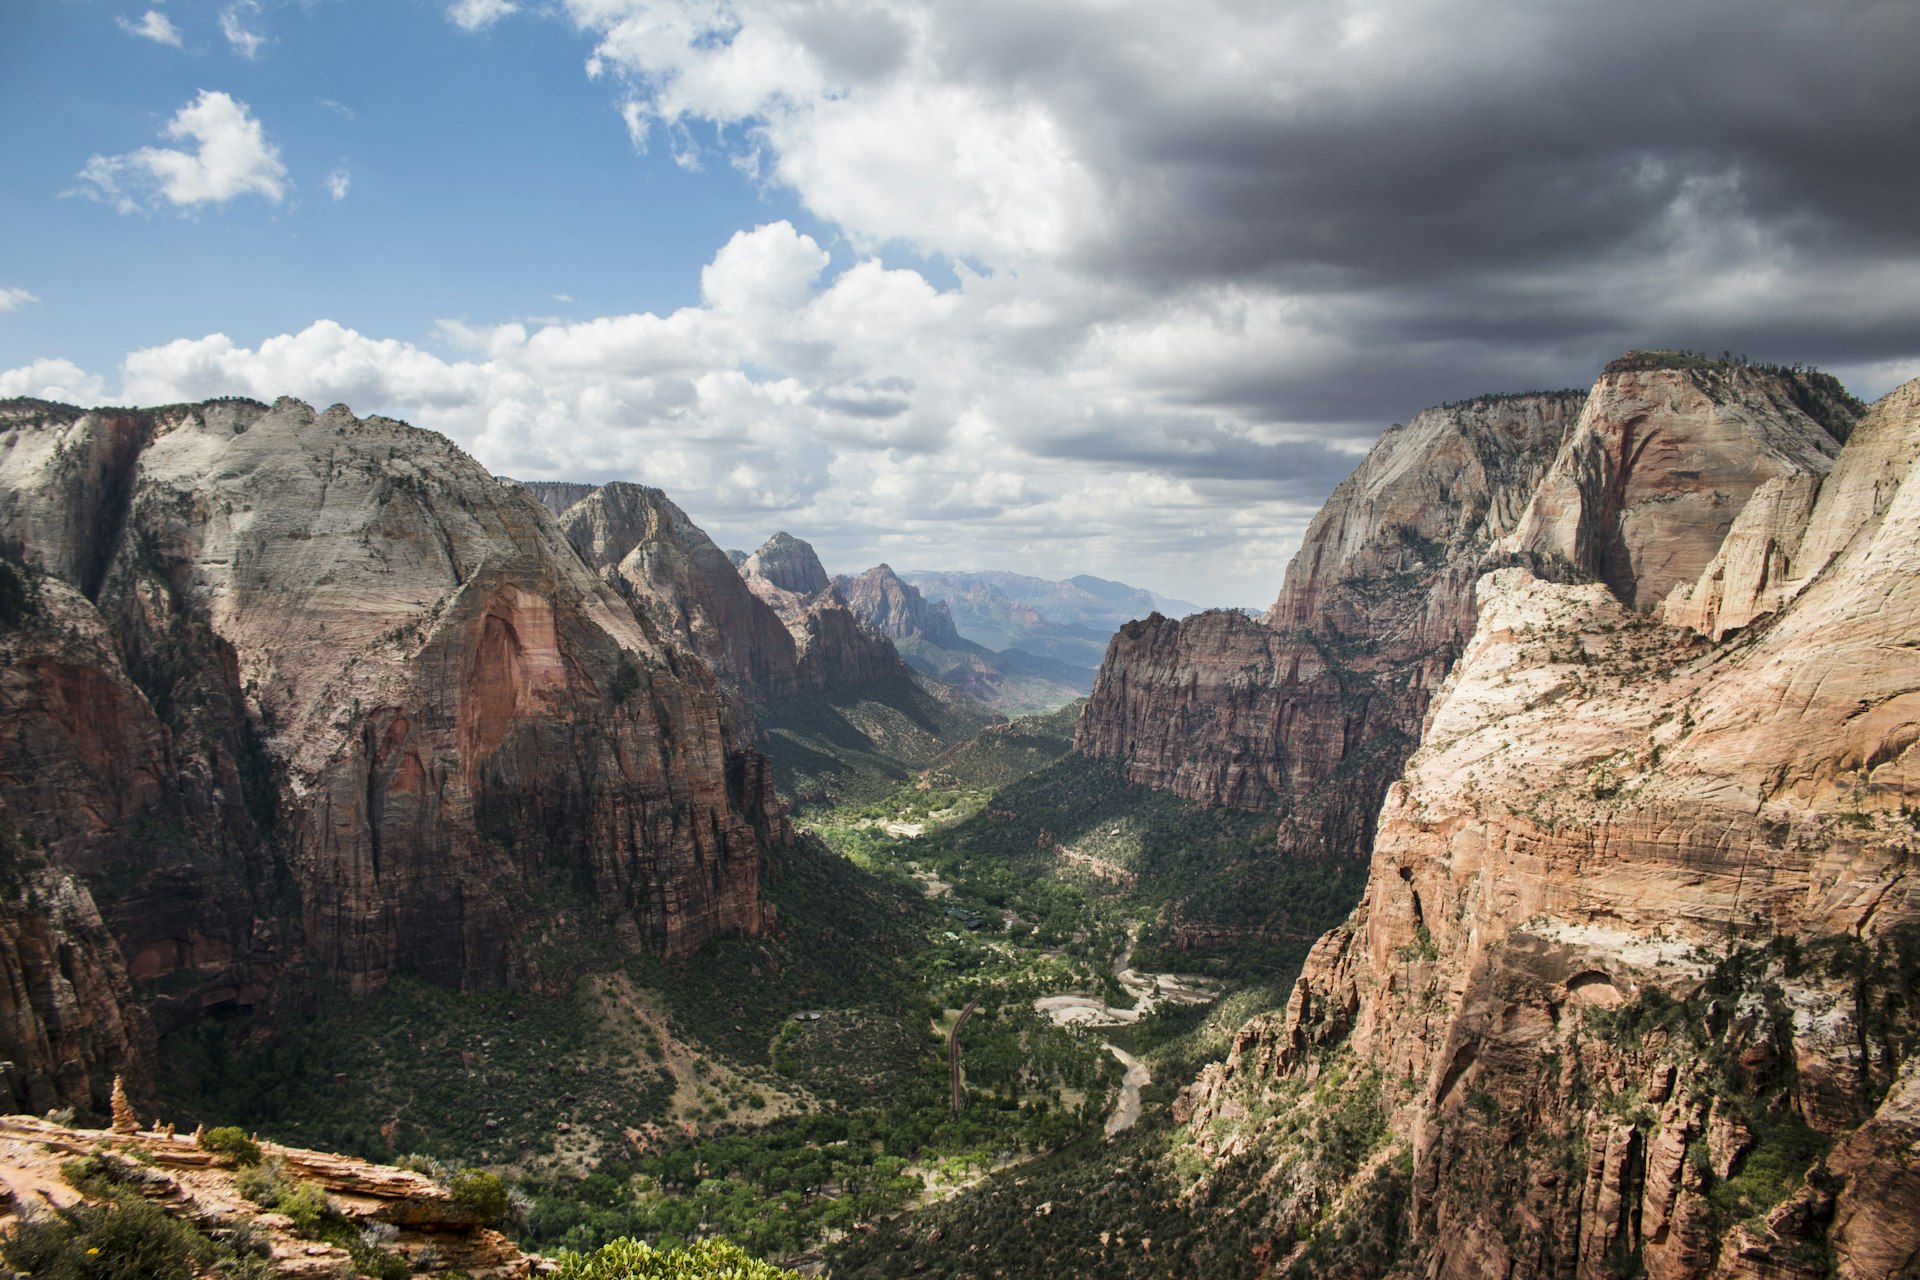 A landscape photograph of a deep canyon